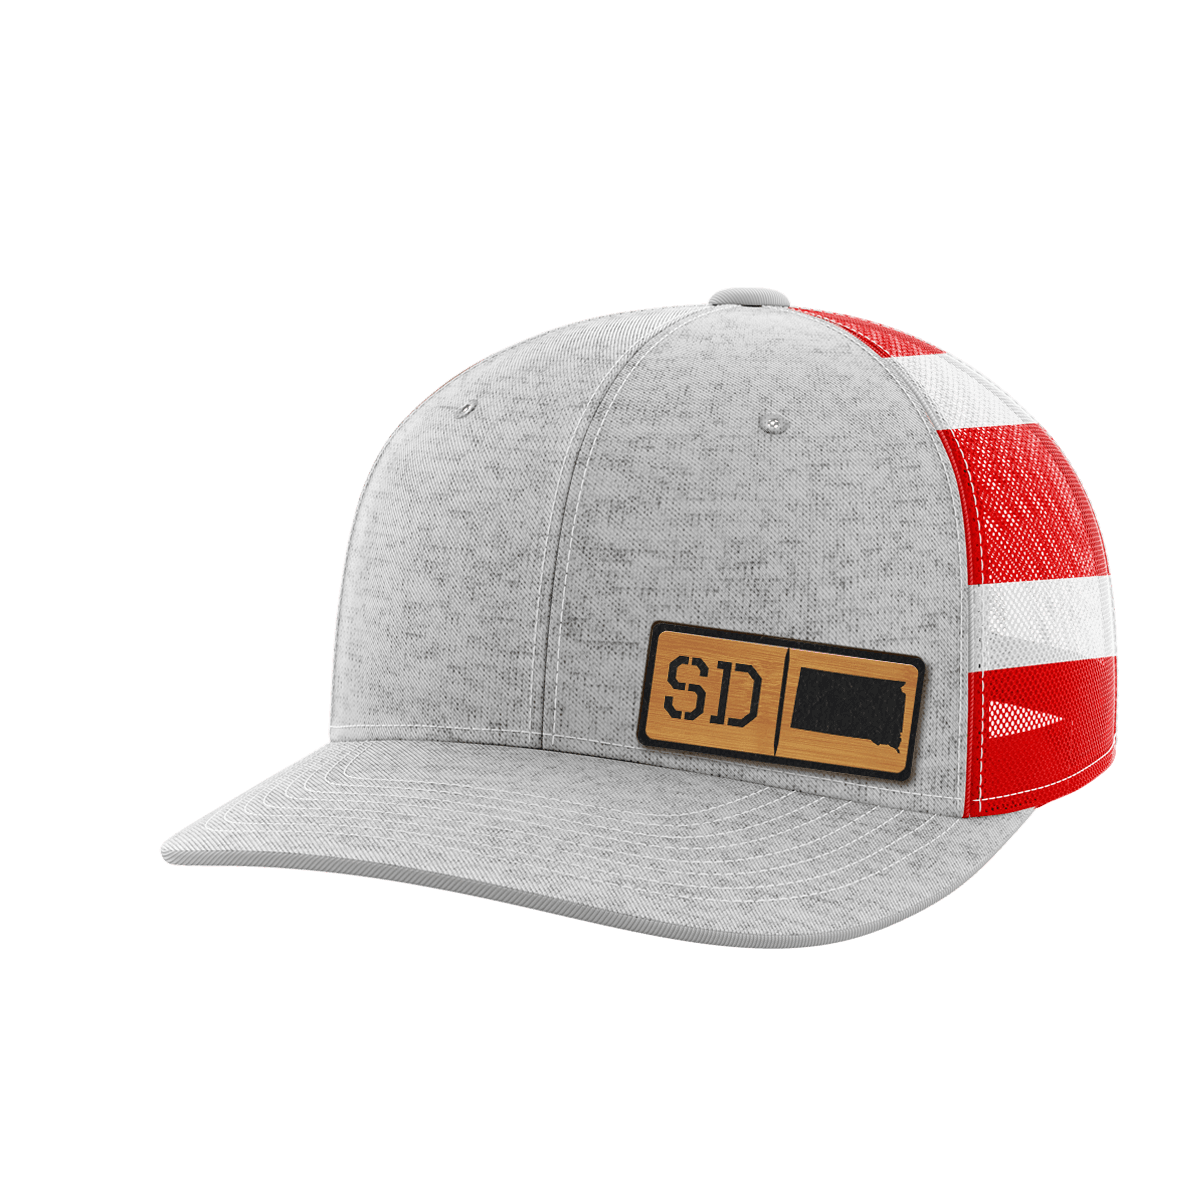 Thumbnail for South Dakota Homegrown Hats - Greater Half